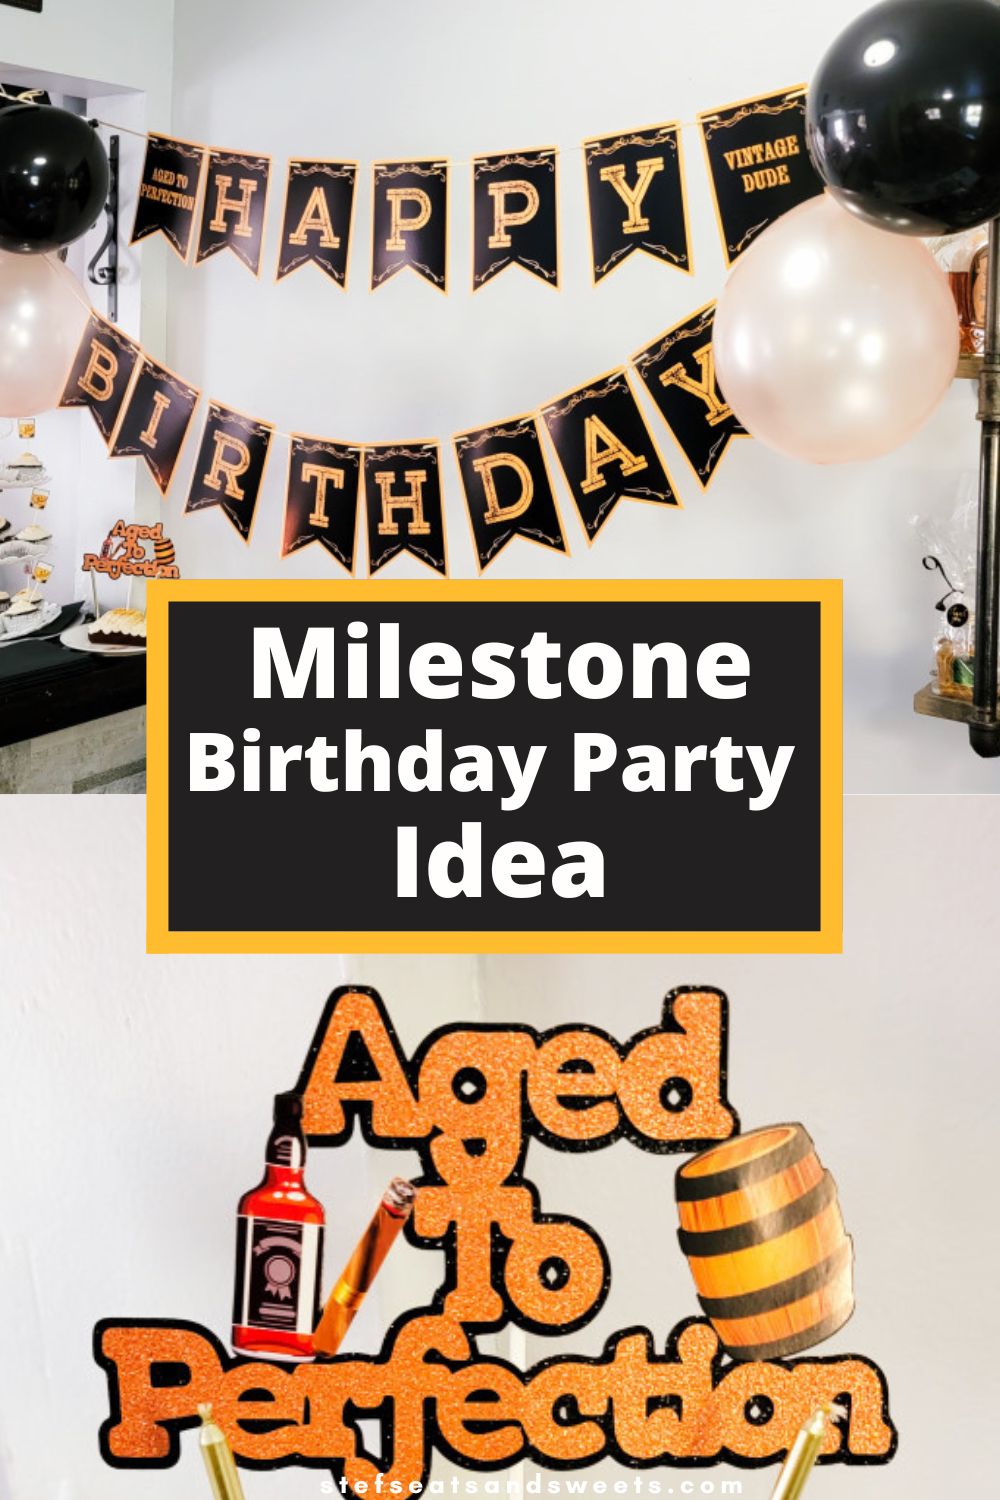 Milestone-birthday-party-idea